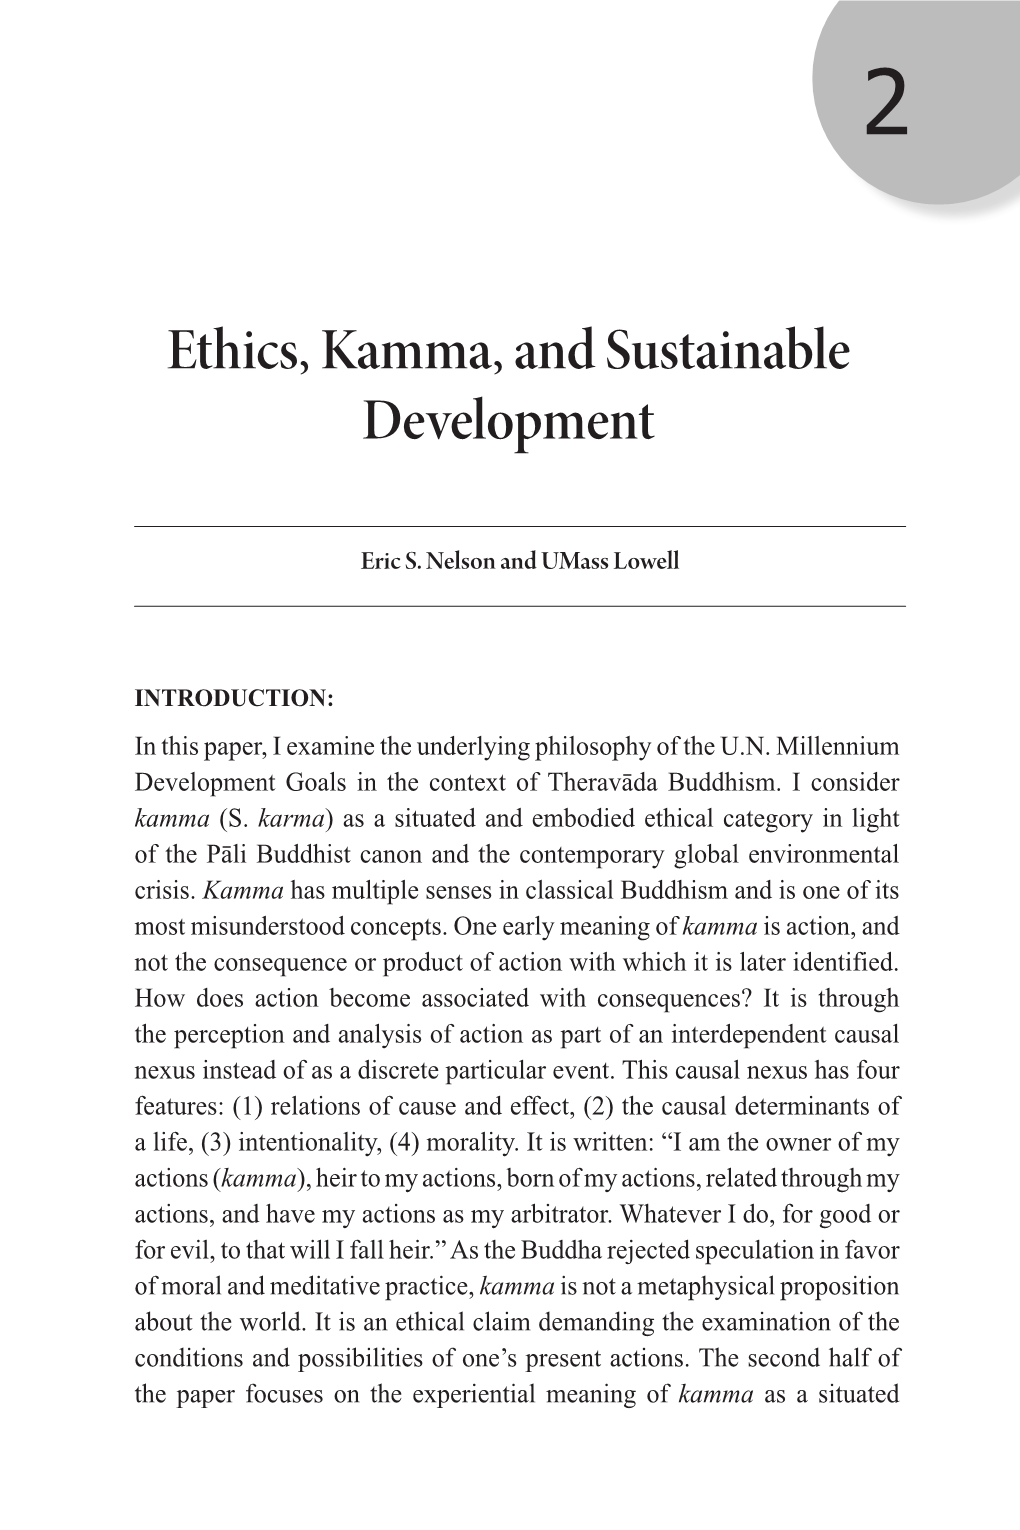 Ethics, Kamma, and Sustainable Development